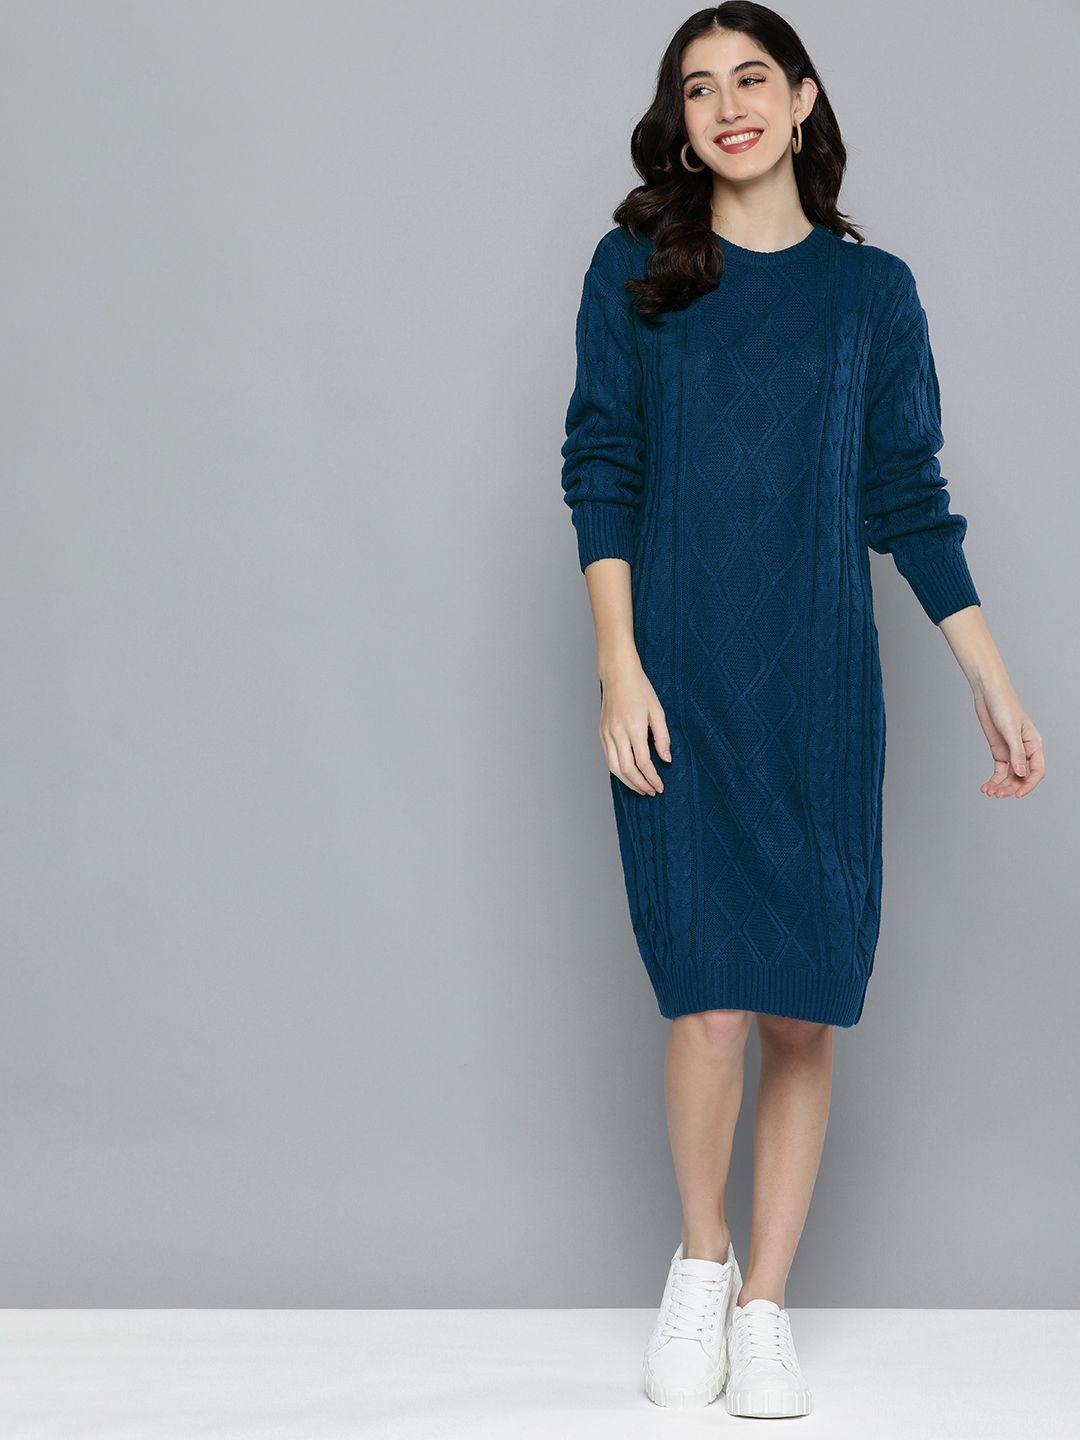 harvard women teal blue self design cable knit knitted jumper midi dress